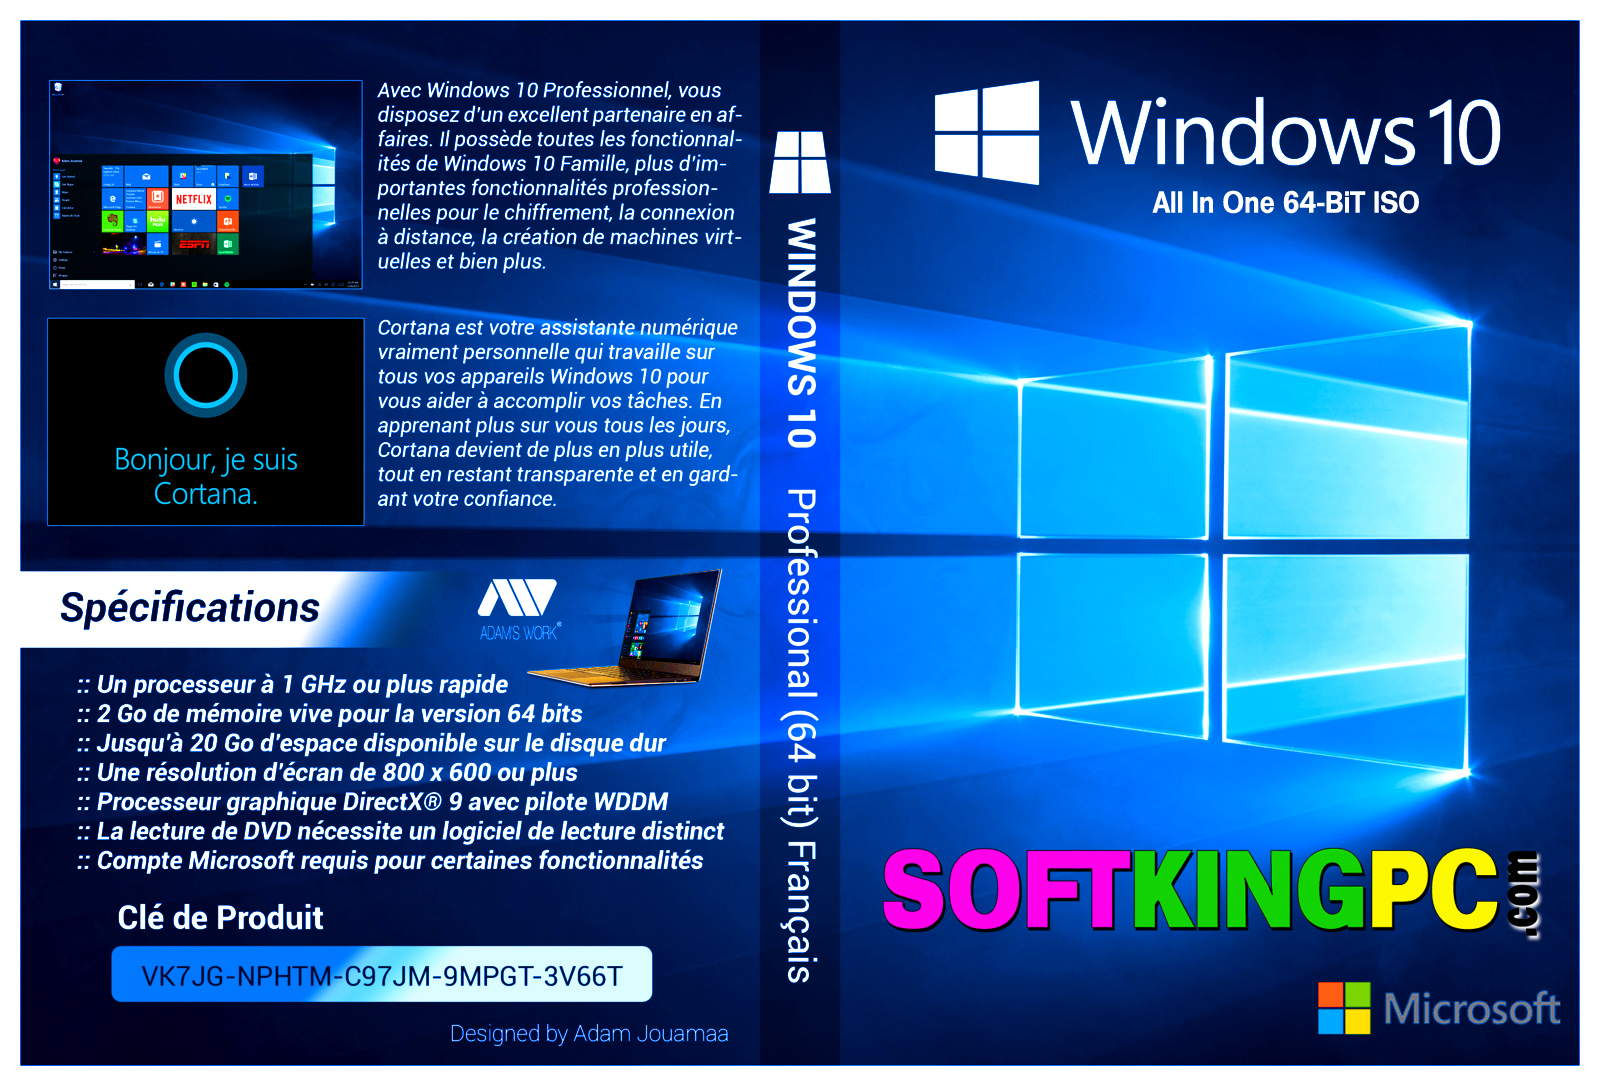 Download windows 10 iso 64 bit upgrade - tangobpo